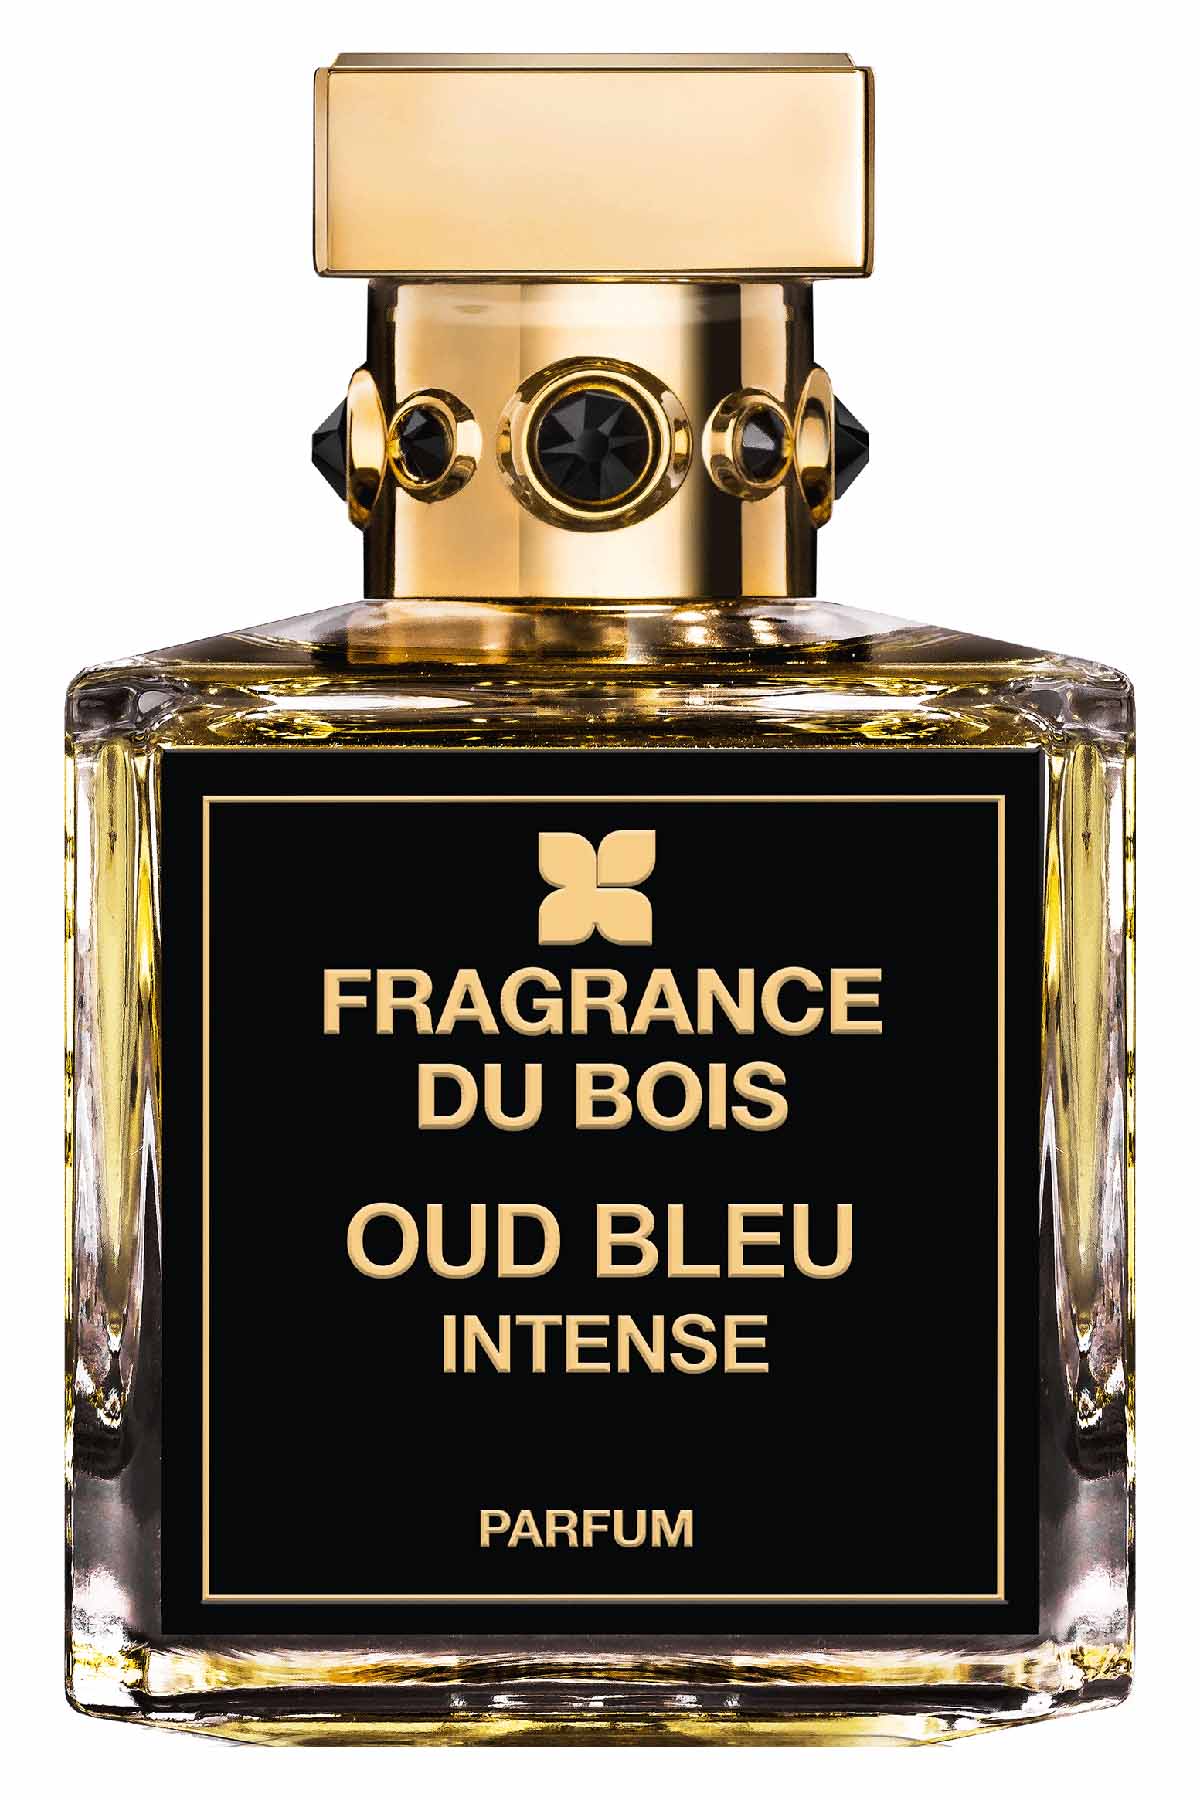 Fragrance Du Bois Oud Bleu Intense Parfum